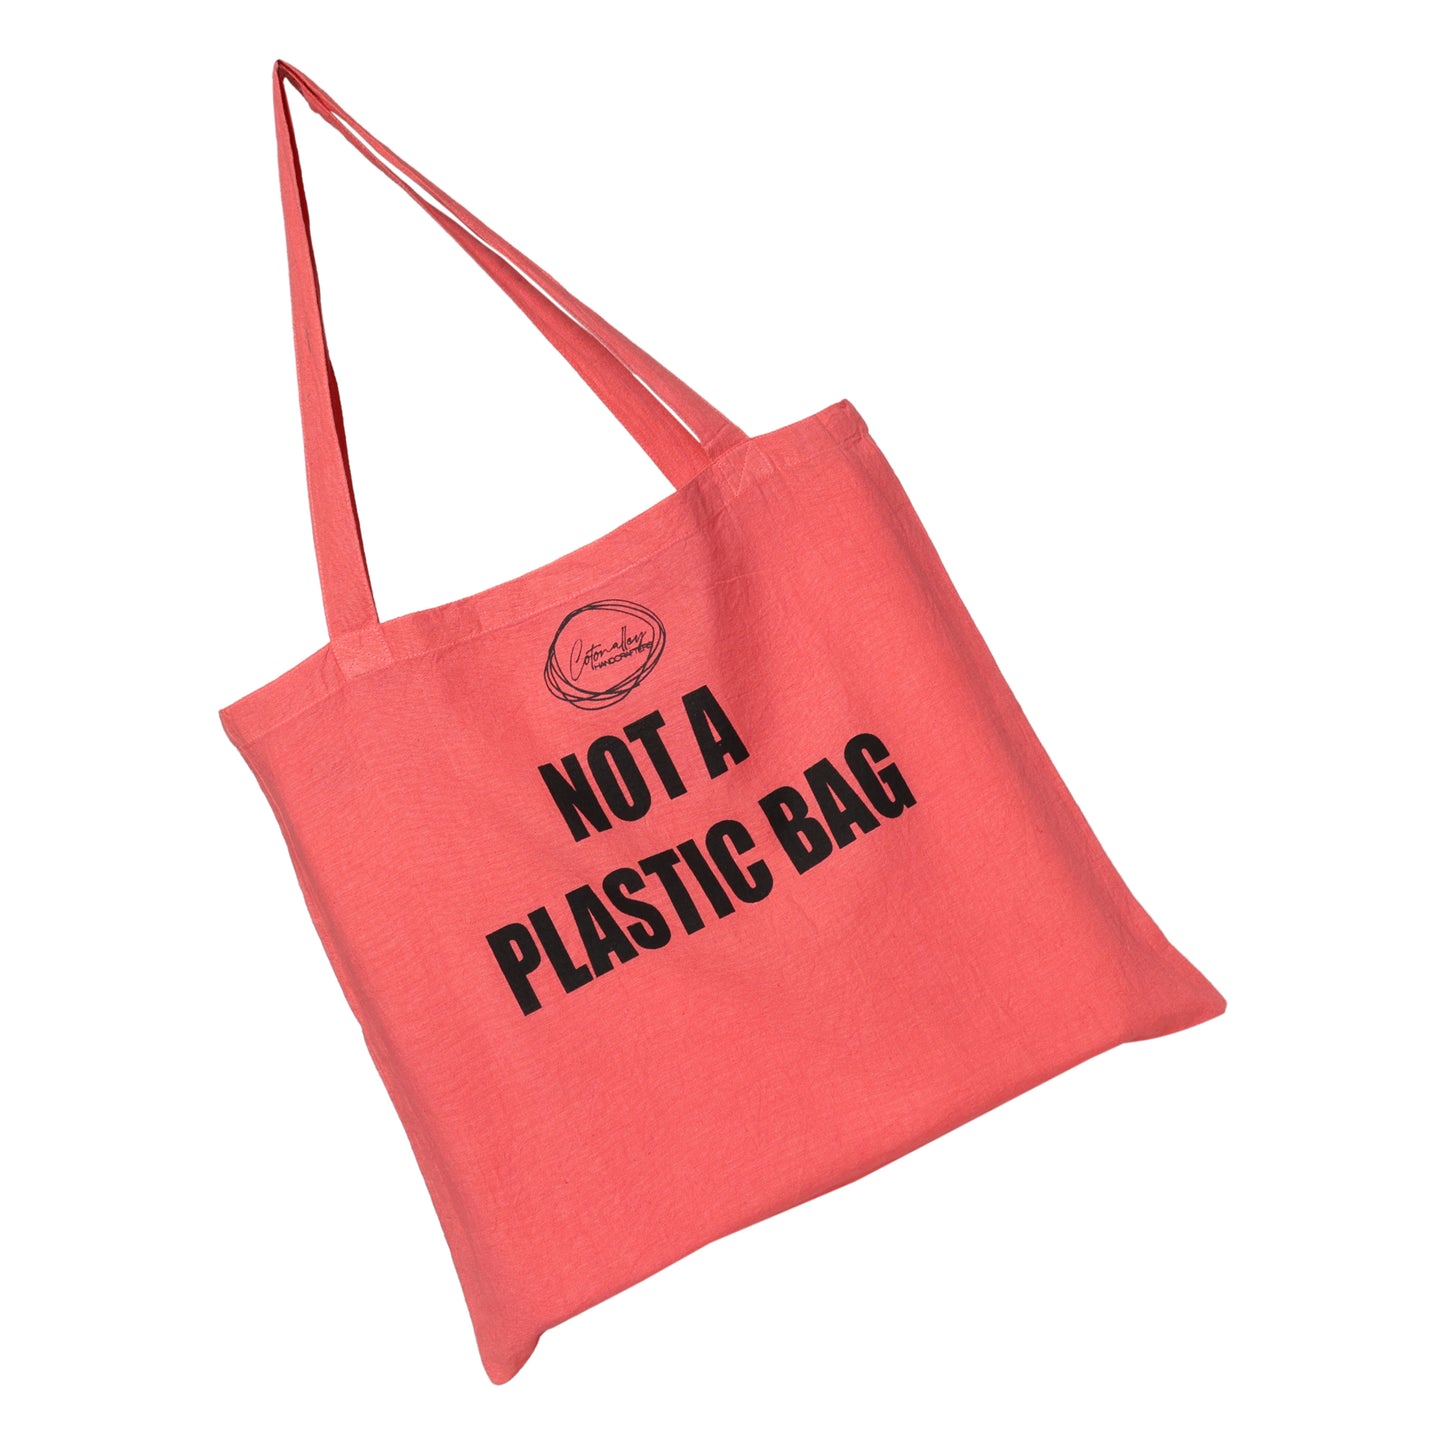 Not A Plastic Bag Bright Pink